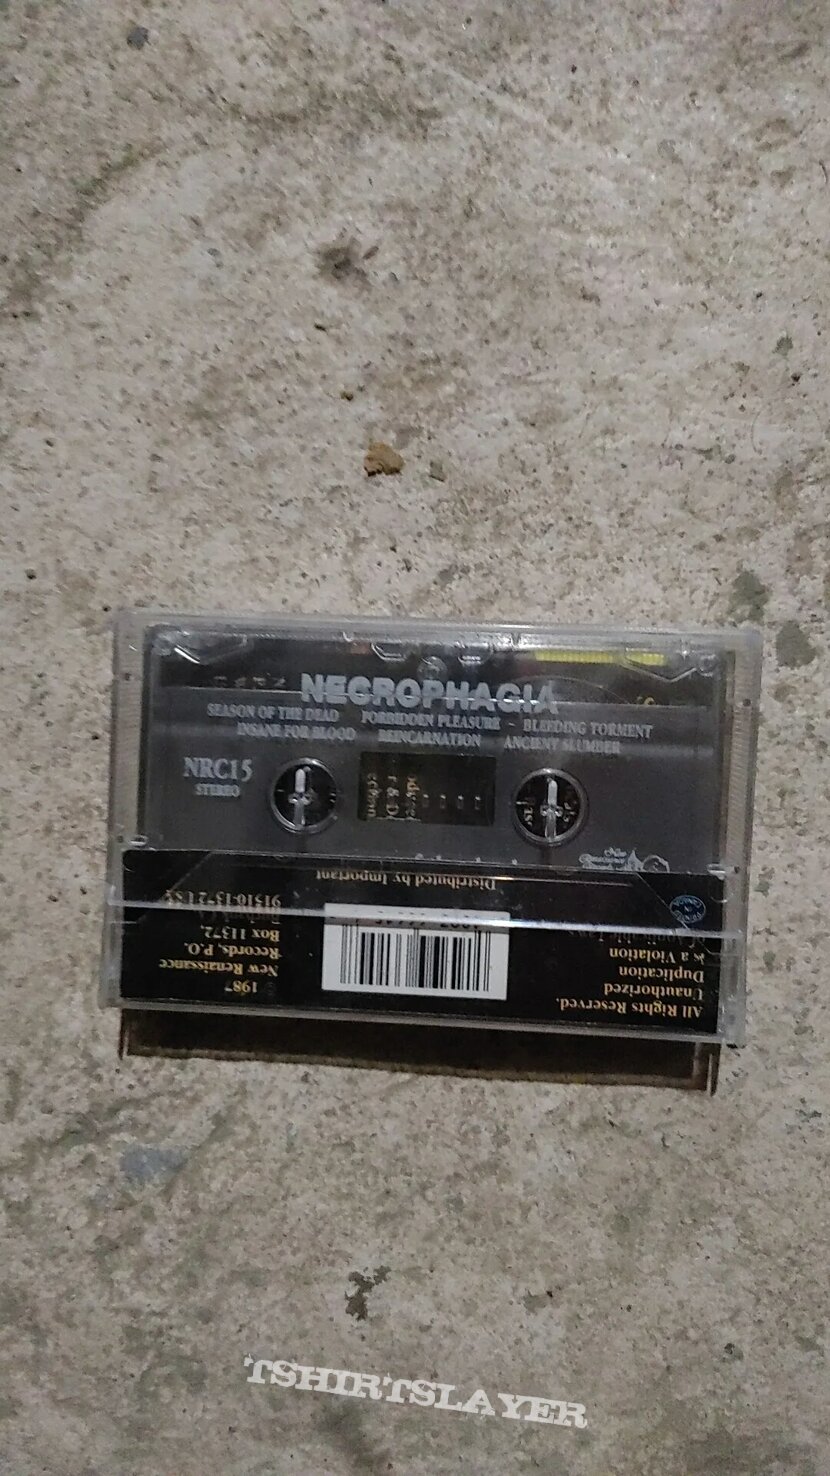 Necrophagia season of the  dead cassette tape 